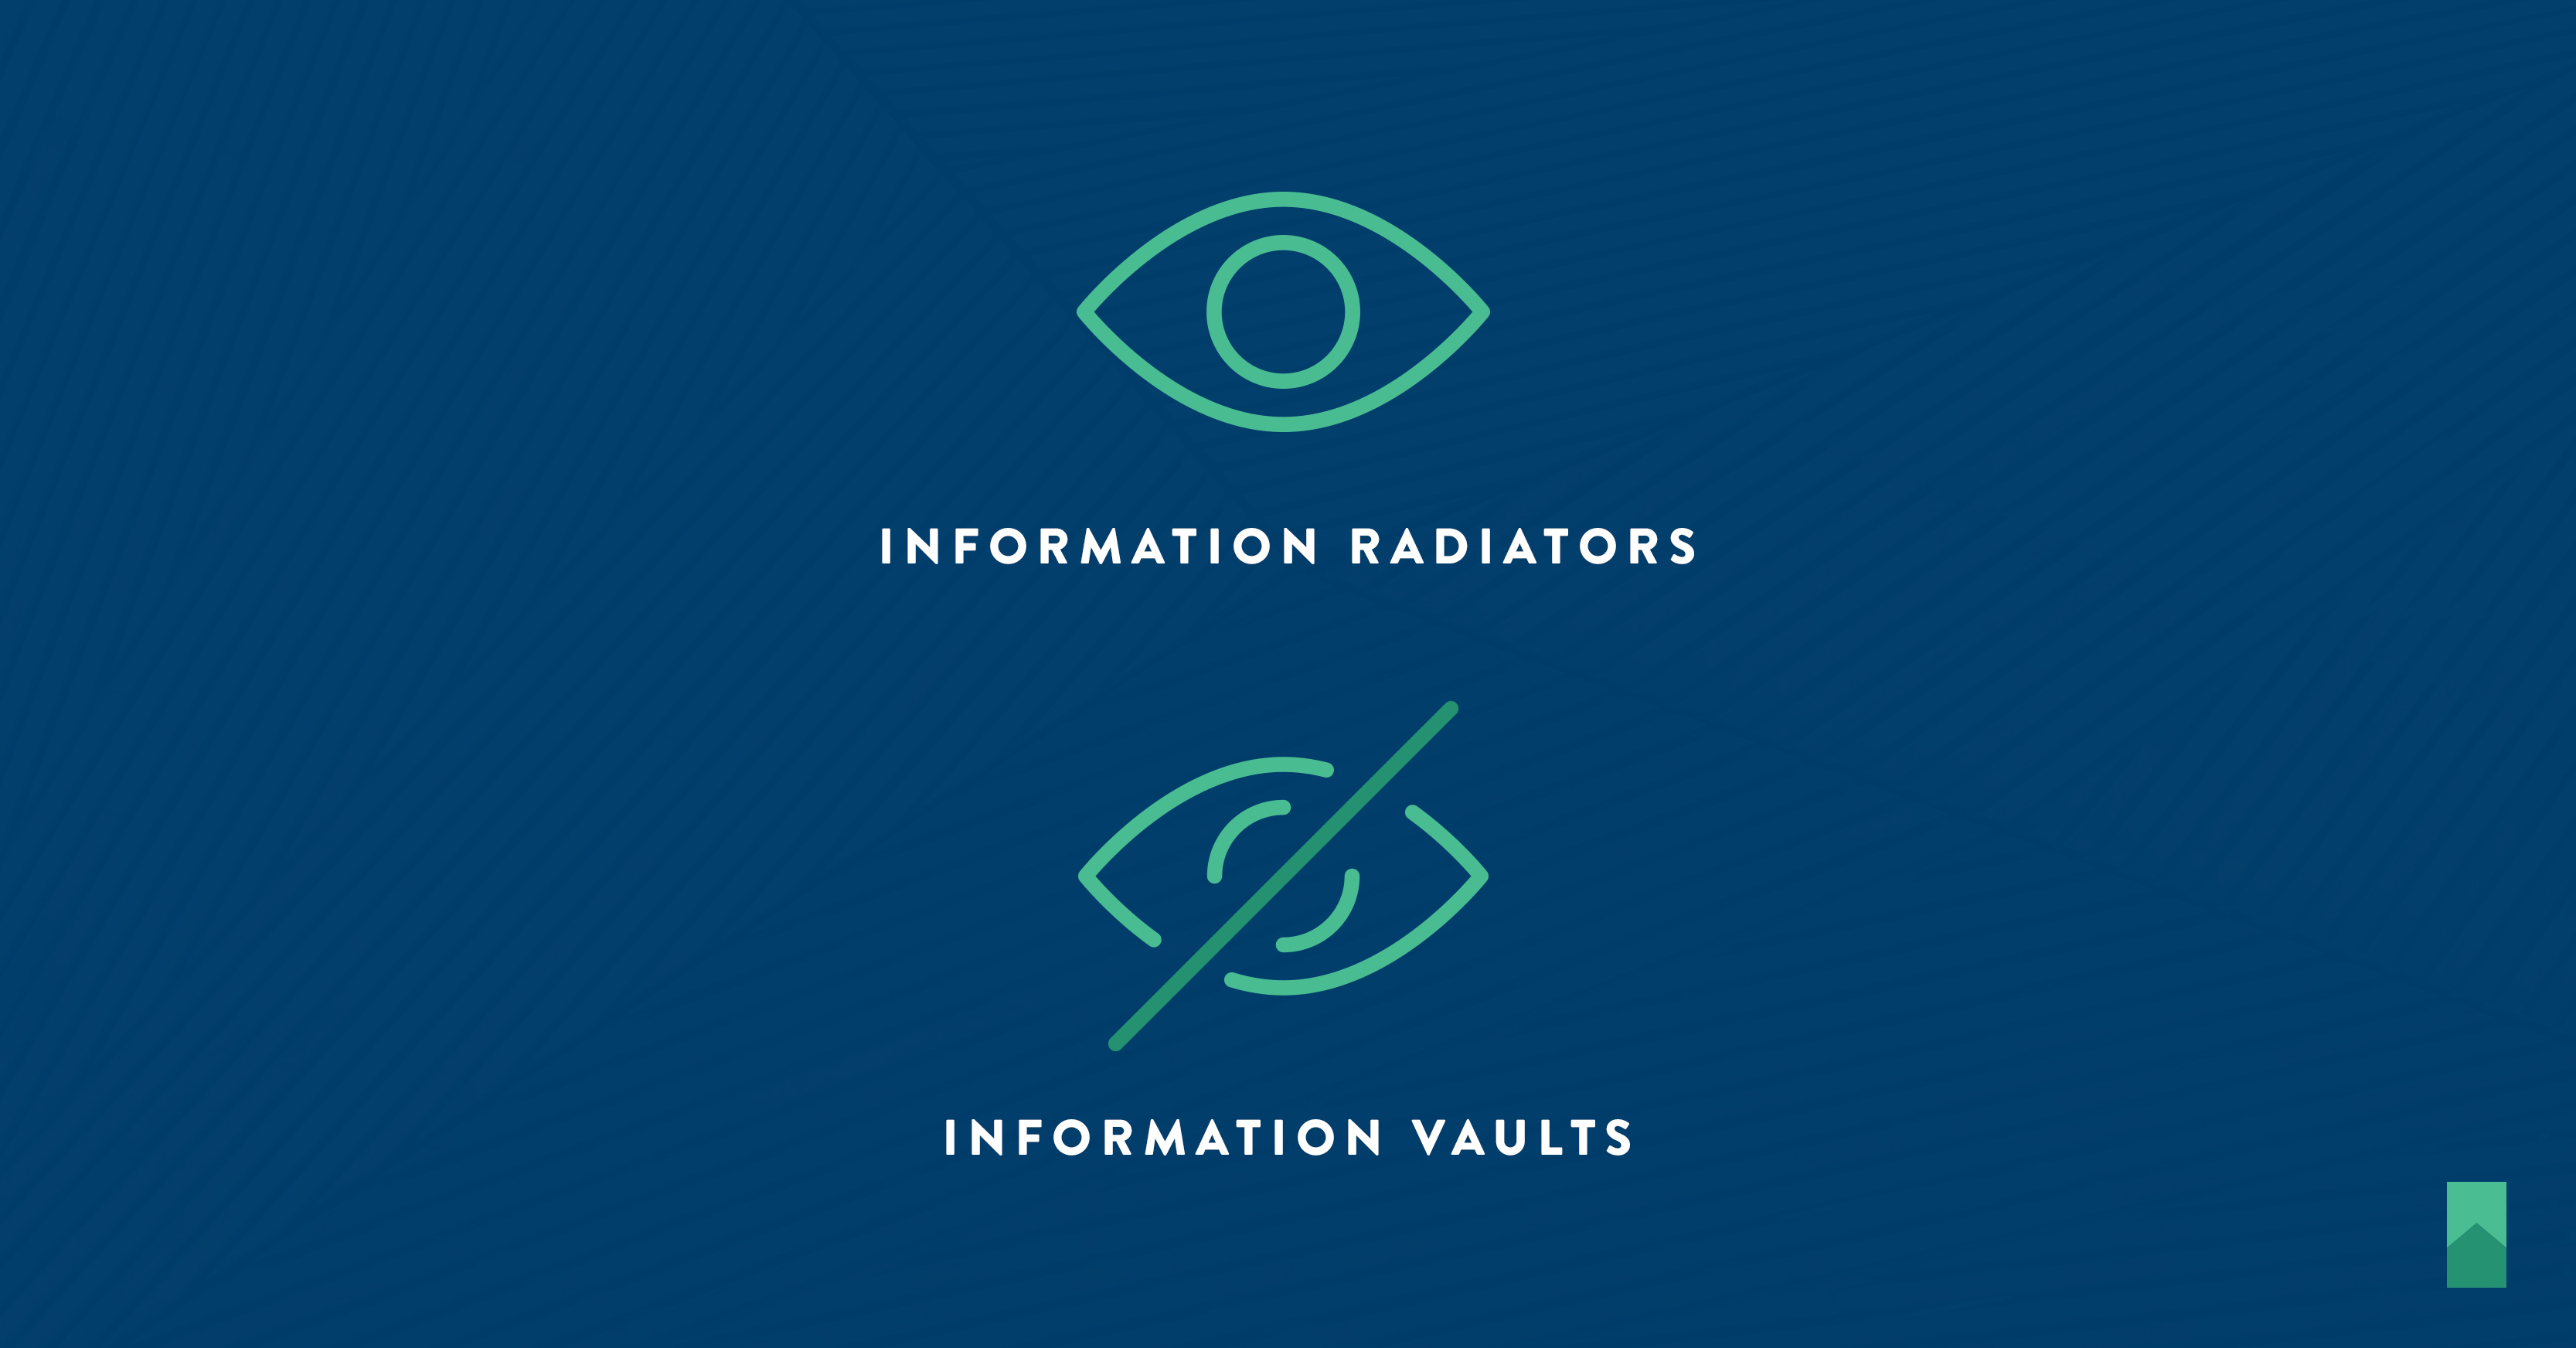 Information Radiators